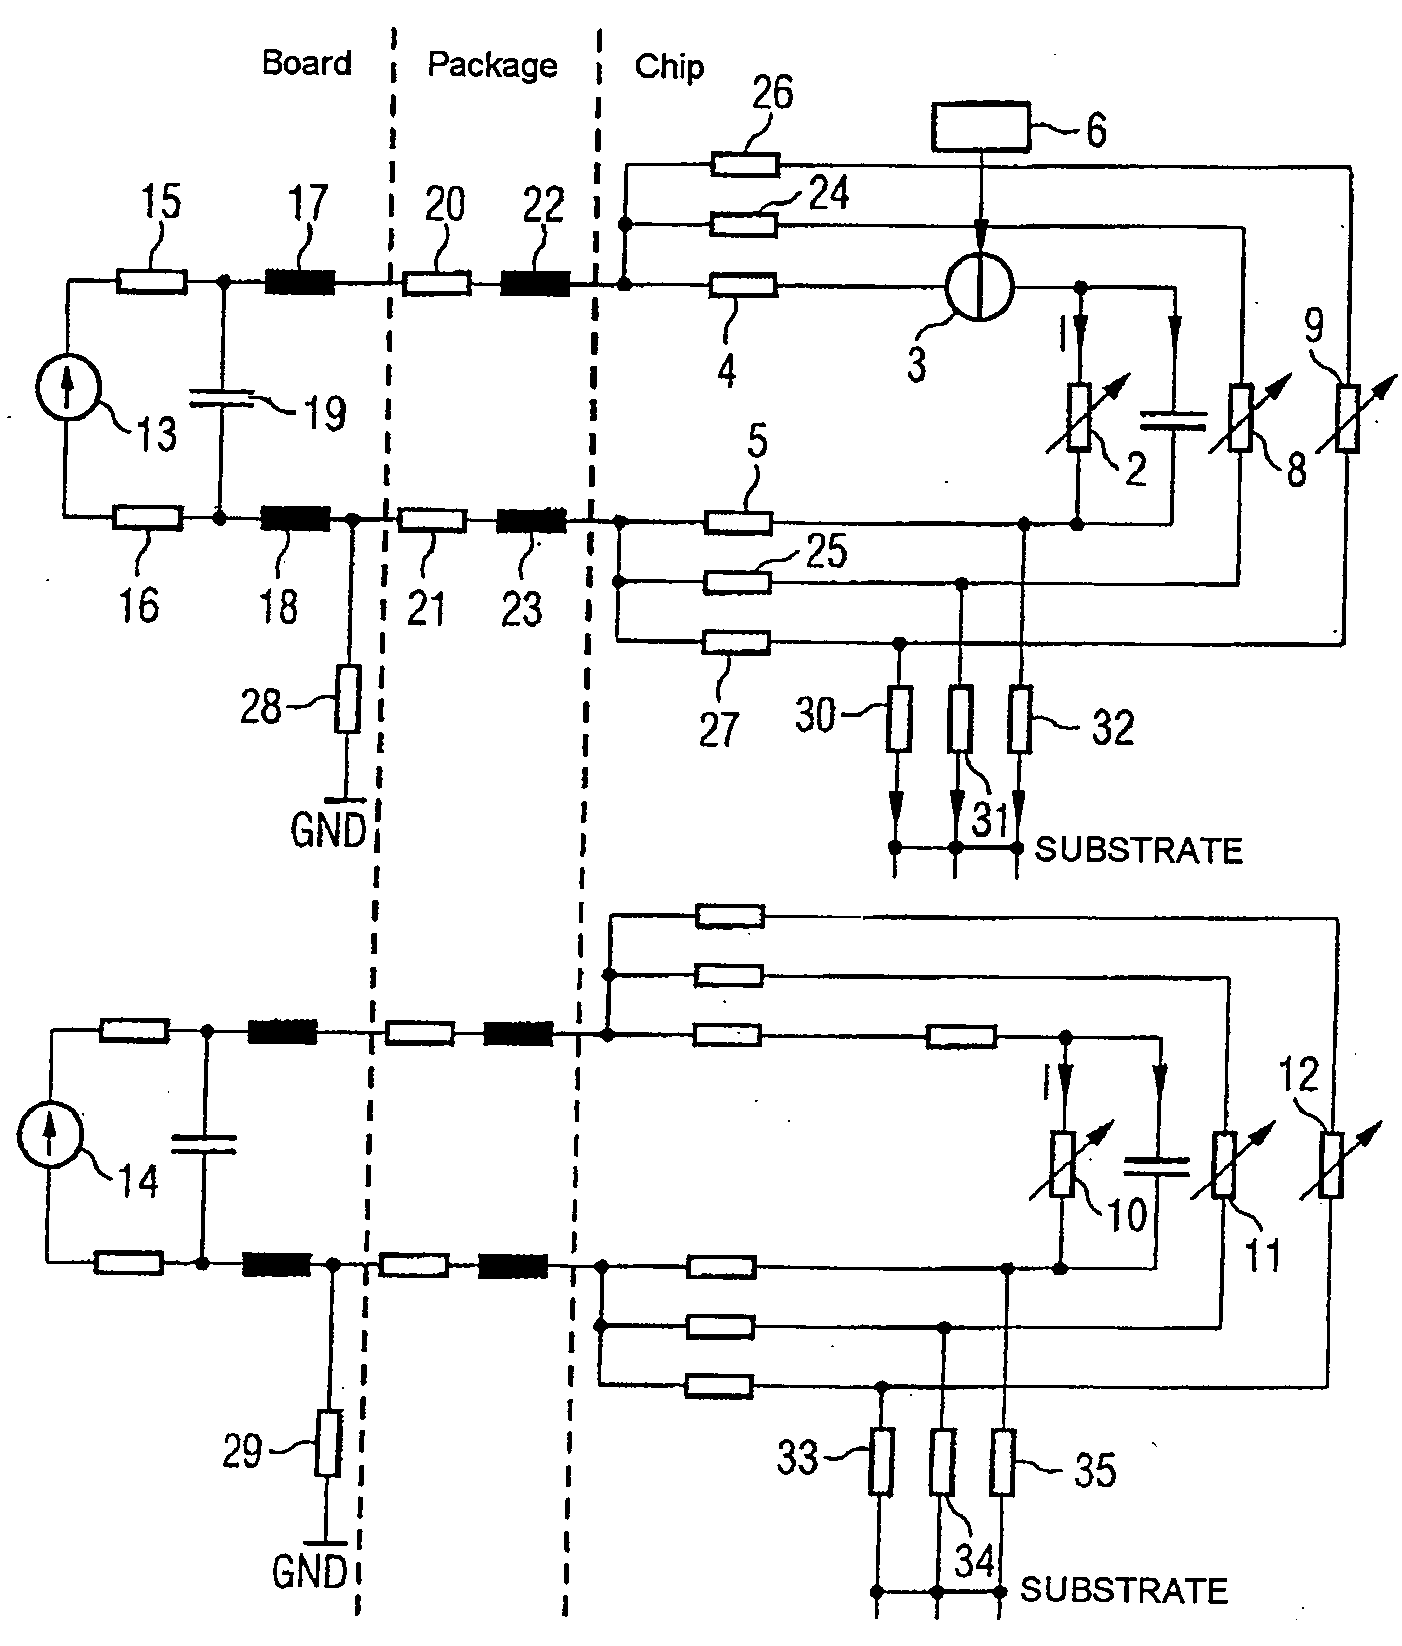 Circuit arrangement and method for reducing crosstalk